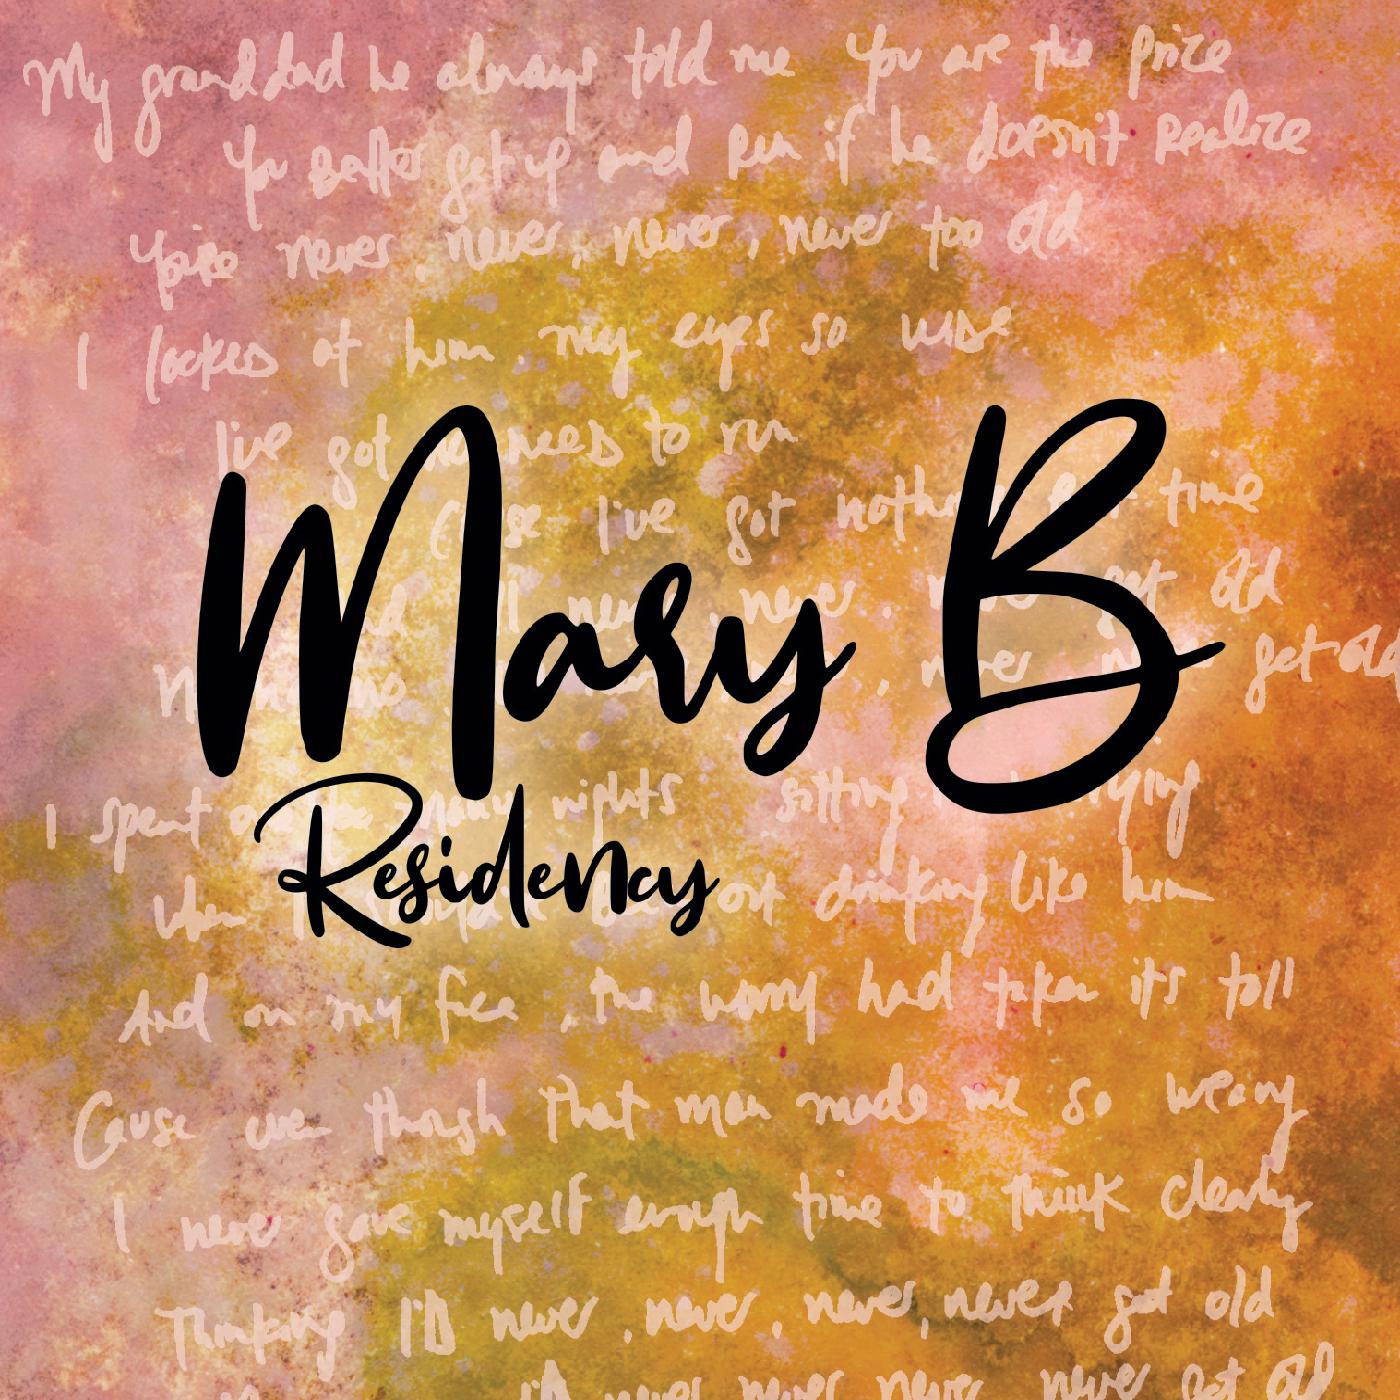 Mary B - The Wedding Song (Lips Like Wine)